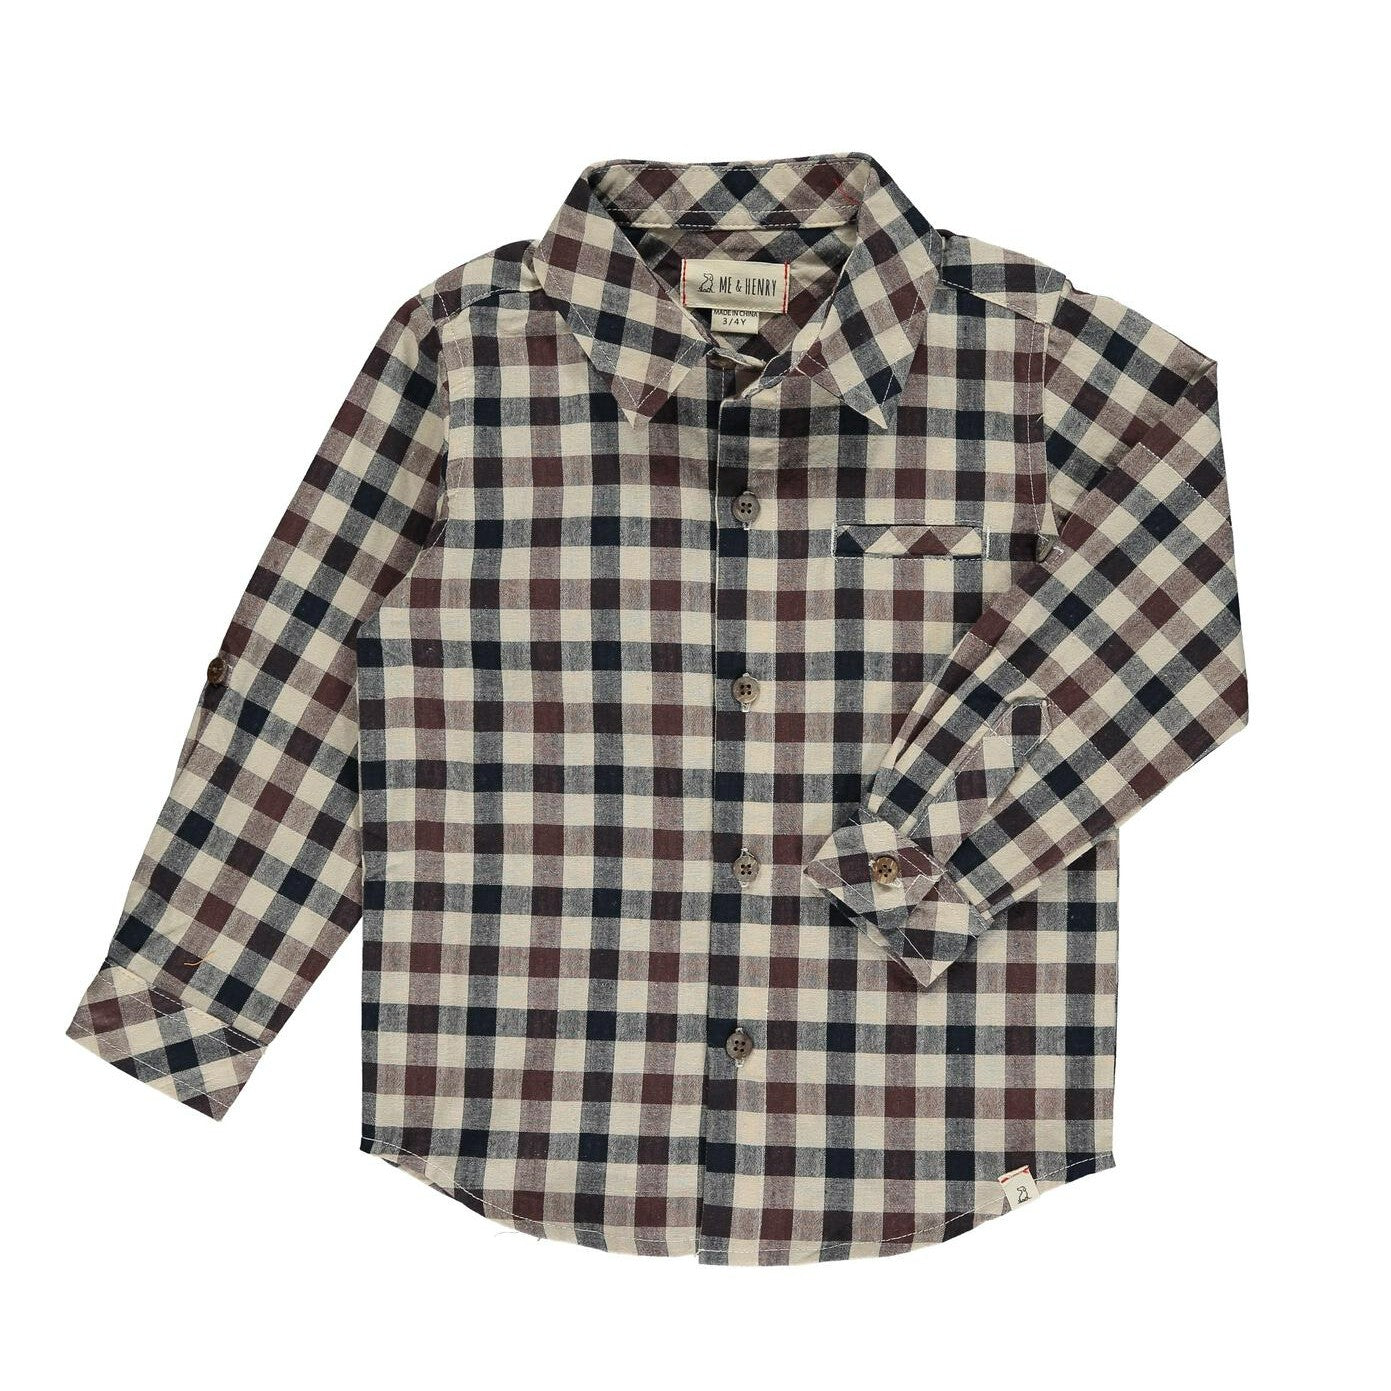 Atwood Woven shirt: Brown/Black Plaid